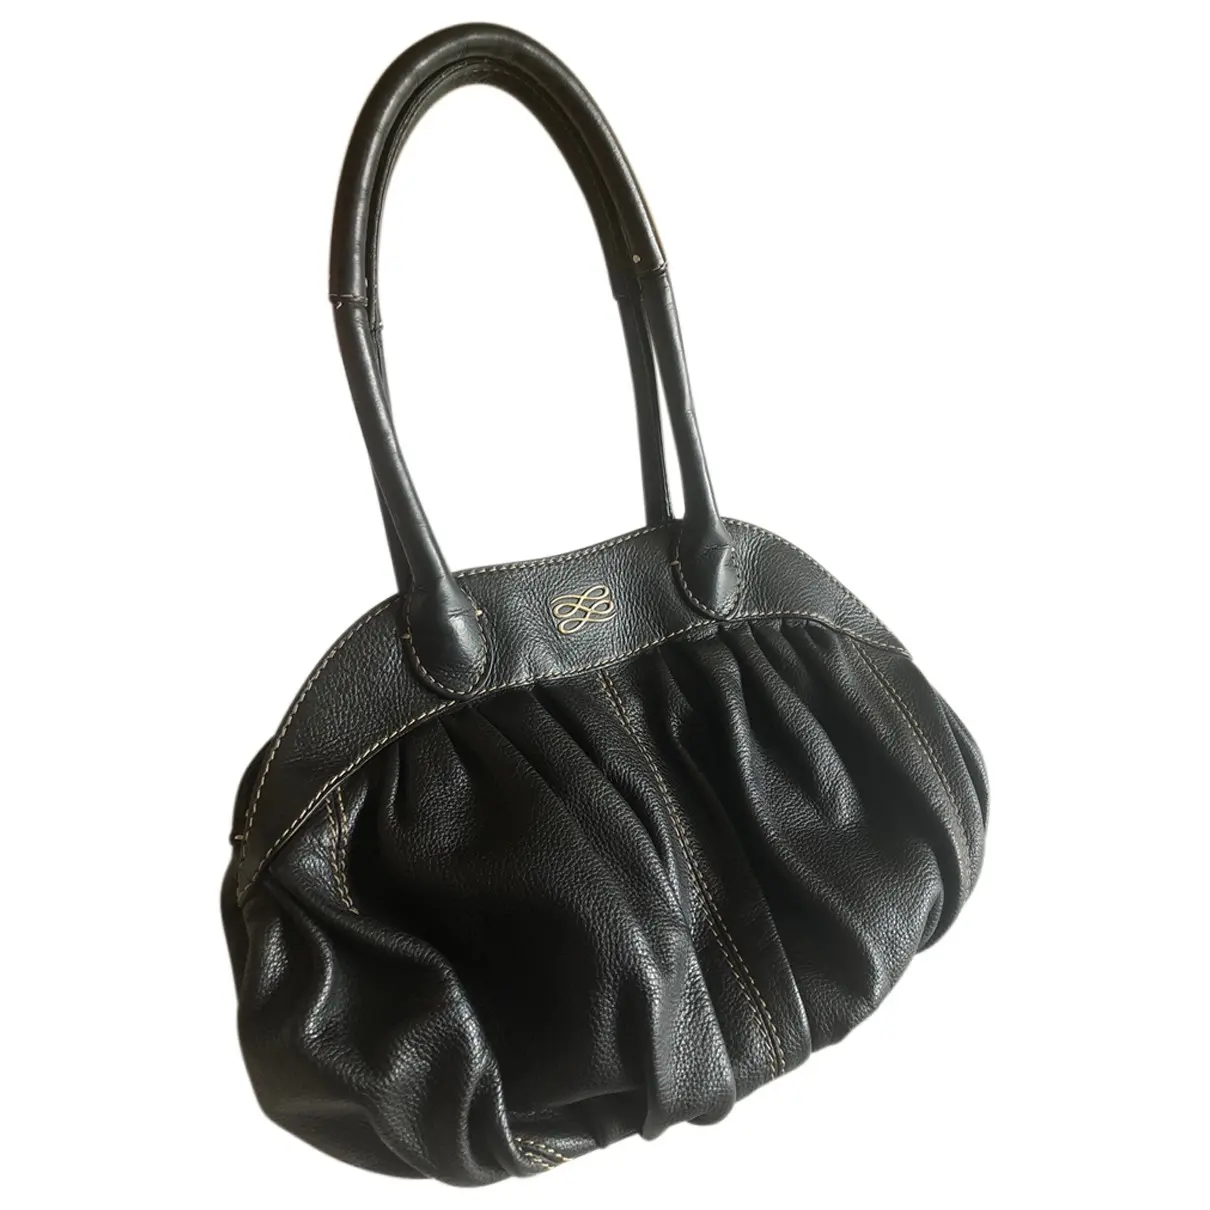 Gousset leather handbag Lancel